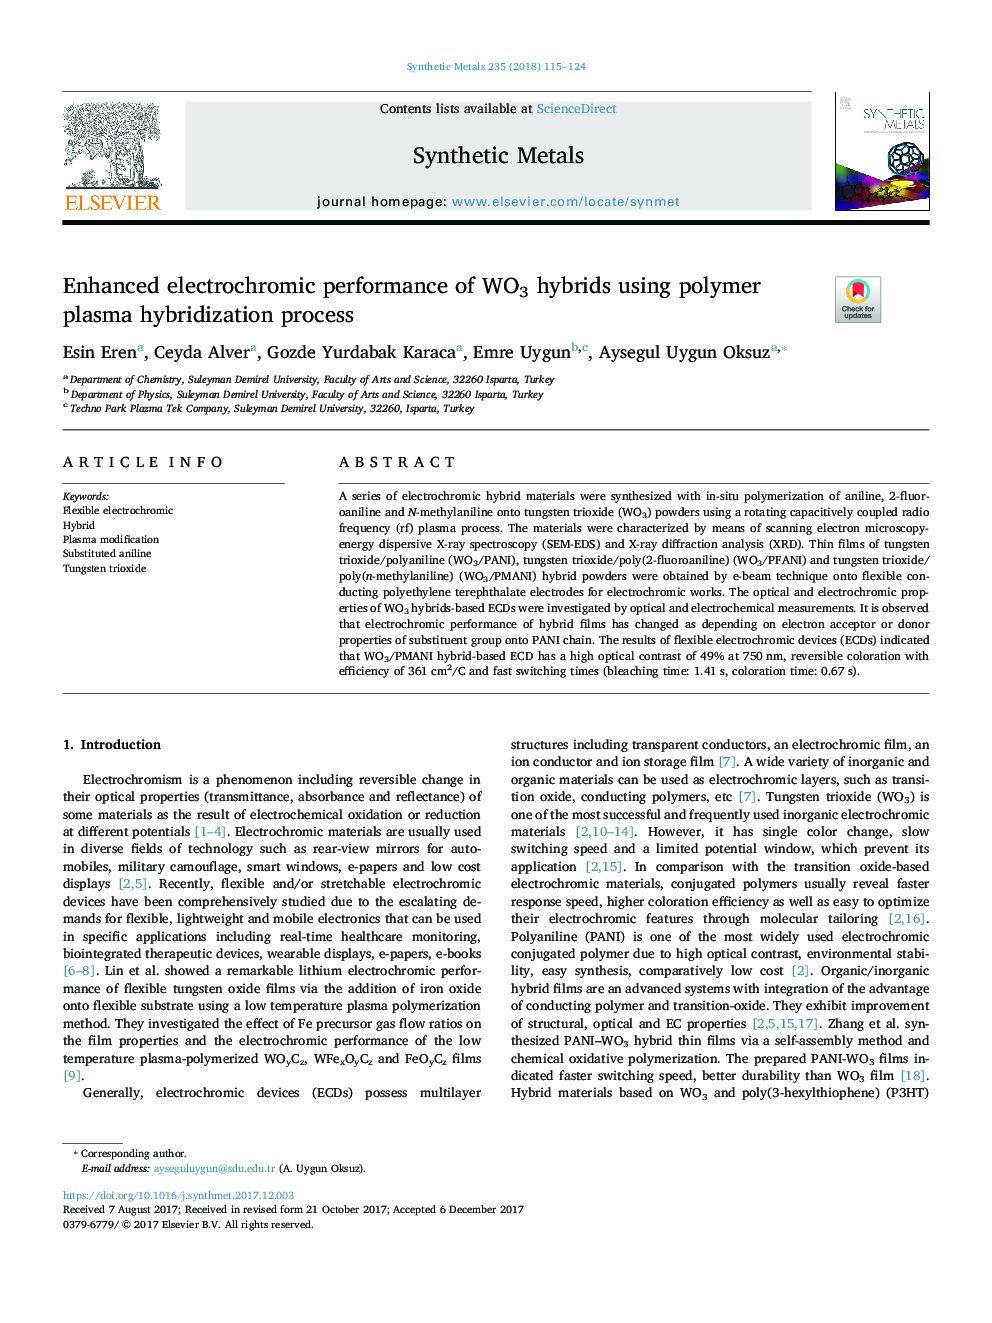 Enhanced electrochromic performance of WO3 hybrids using polymer plasma hybridization process